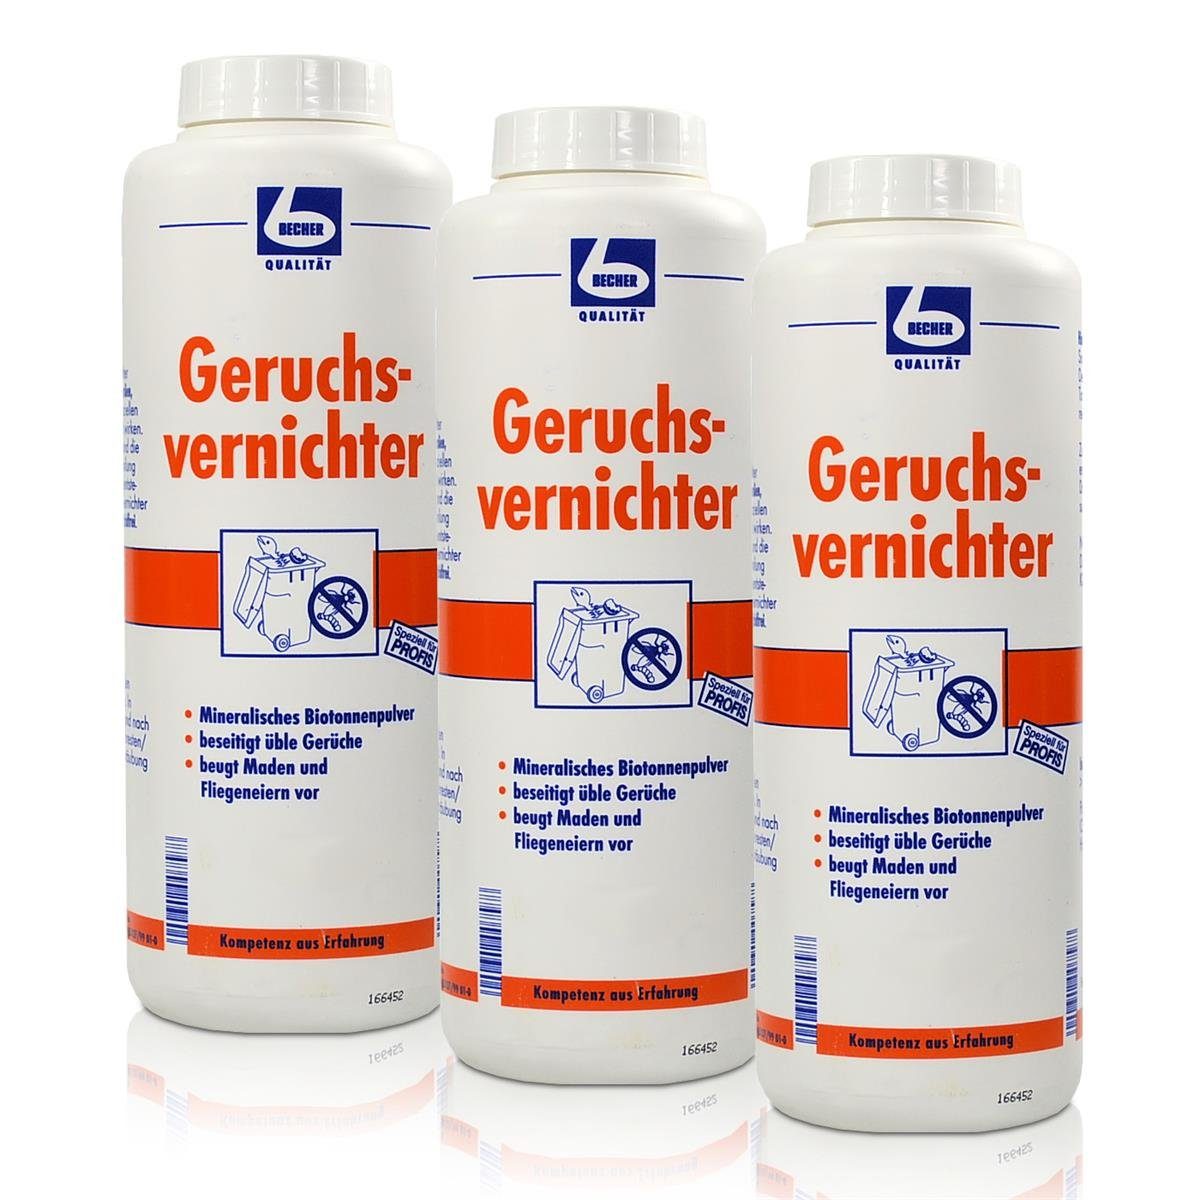 Dr. Becher 3x Dr. Becher Geruchsvernichter 750 g - beseitigtle Gerüche Spezialwaschmittel | Waschmittel